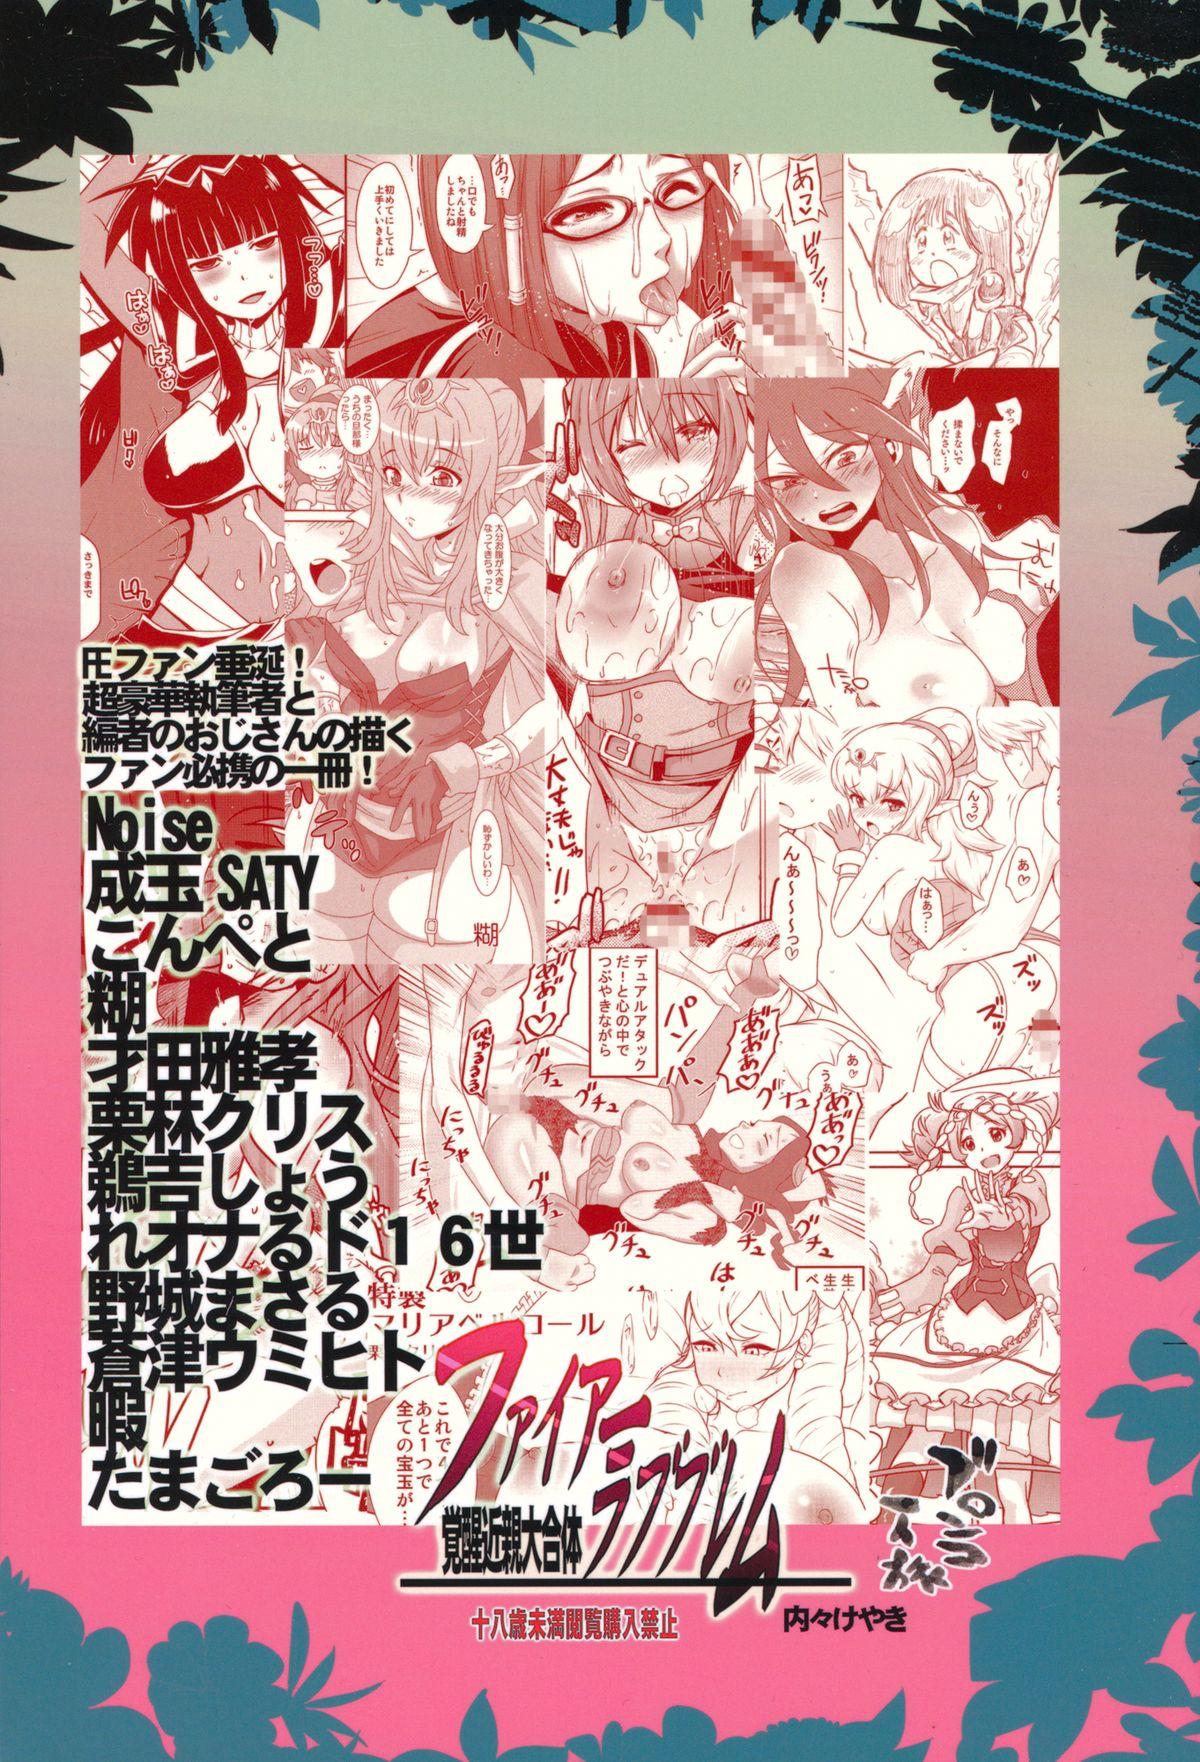 Ngentot Fire Loveblem - Kakusei Kinshin Daigattai - Fire emblem awakening Gay Bus - Page 2